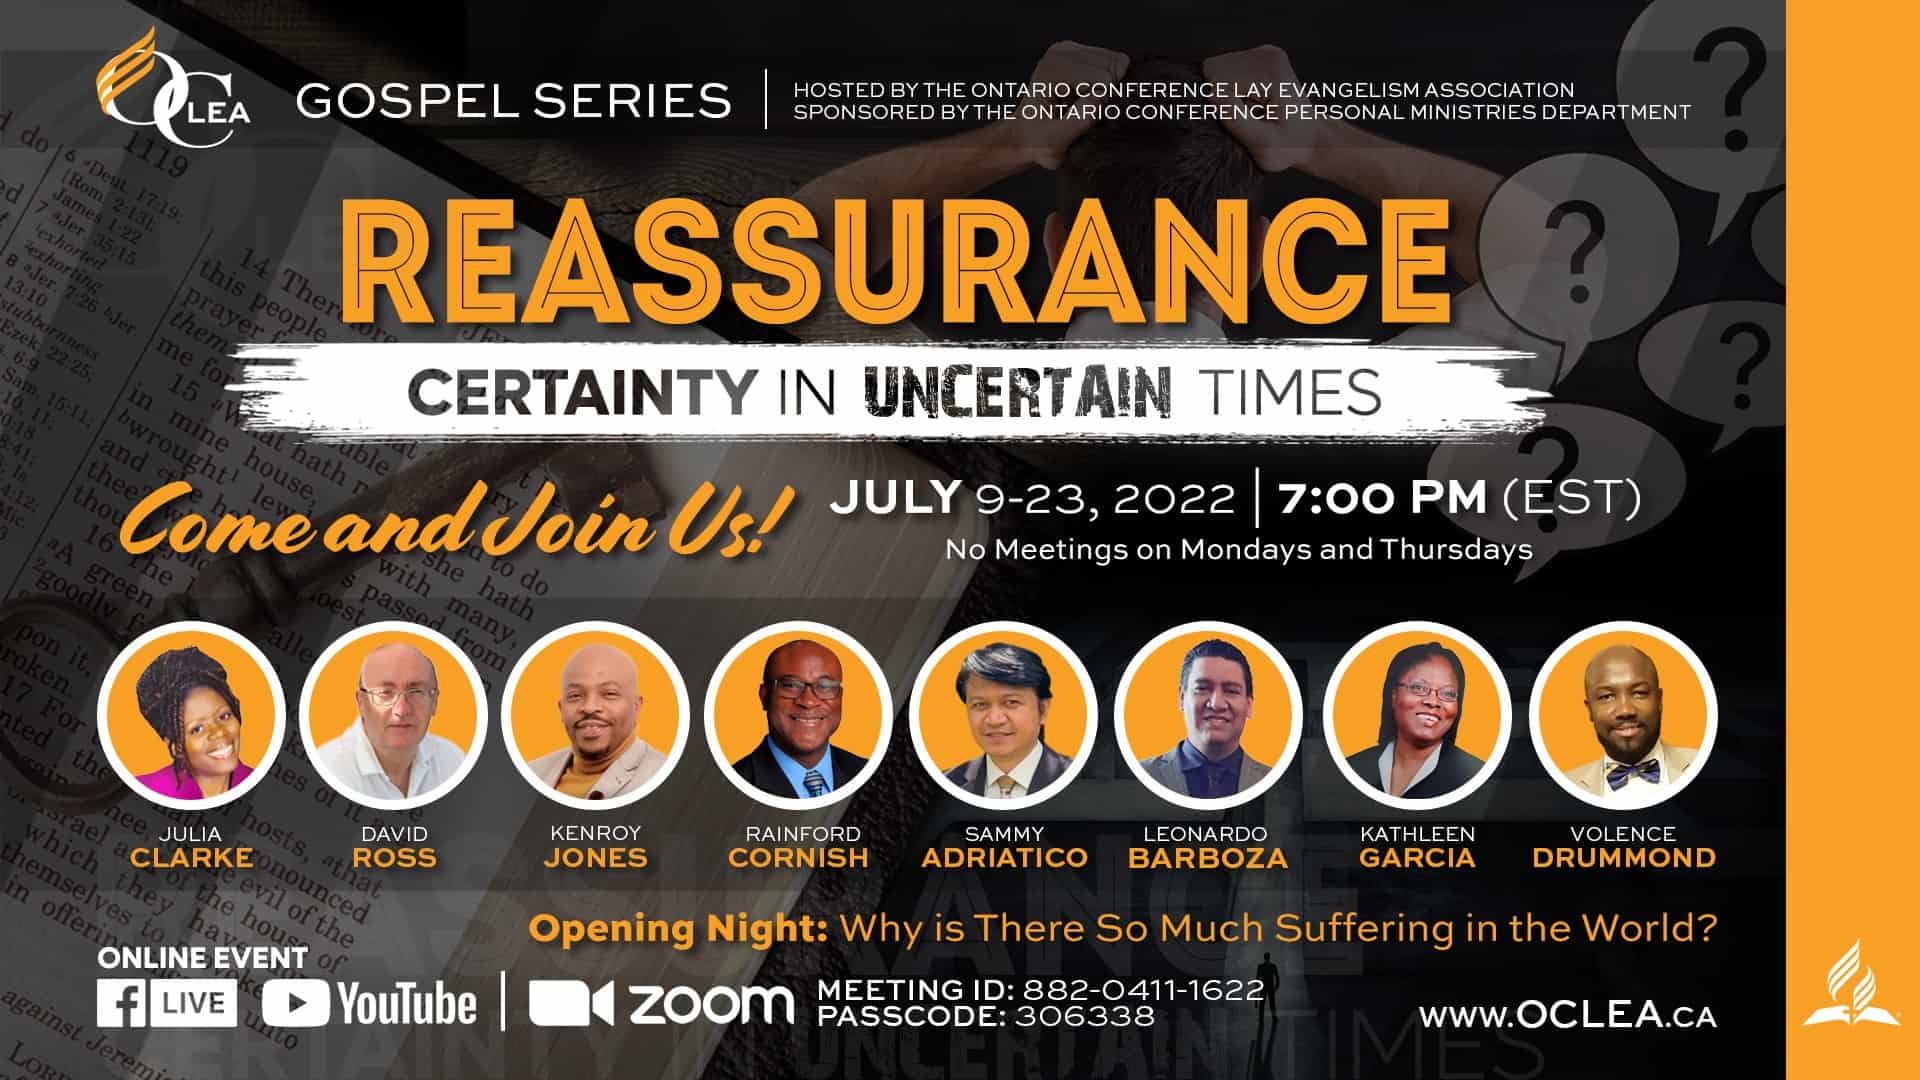 OCLEA Reassurance Evangelism Flyer July 9-23 2022